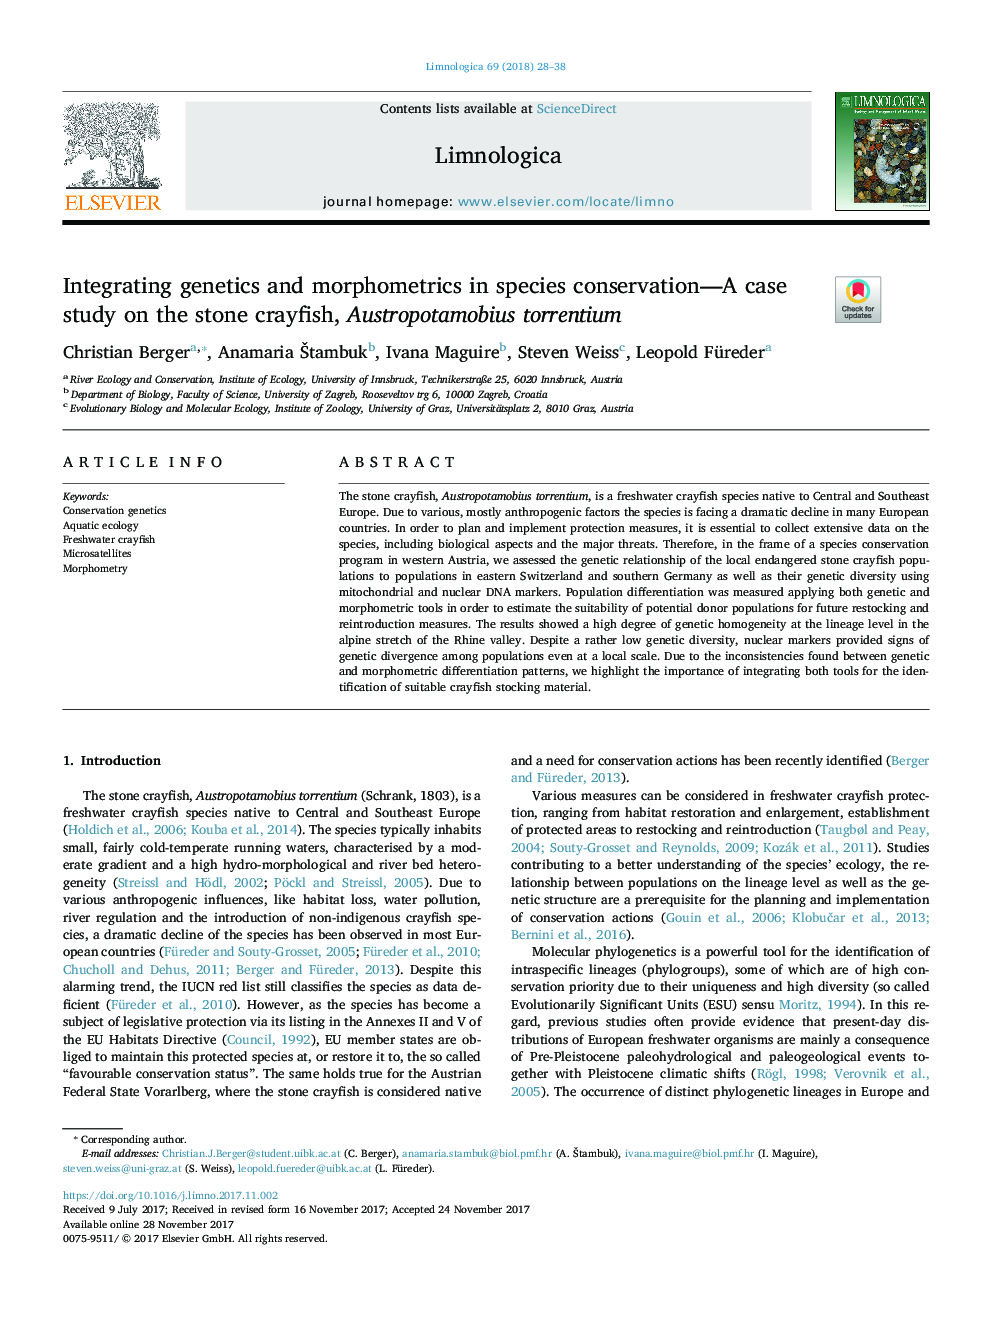 Integrating genetics and morphometrics in species conservation-A case study on the stone crayfish, Austropotamobius torrentium